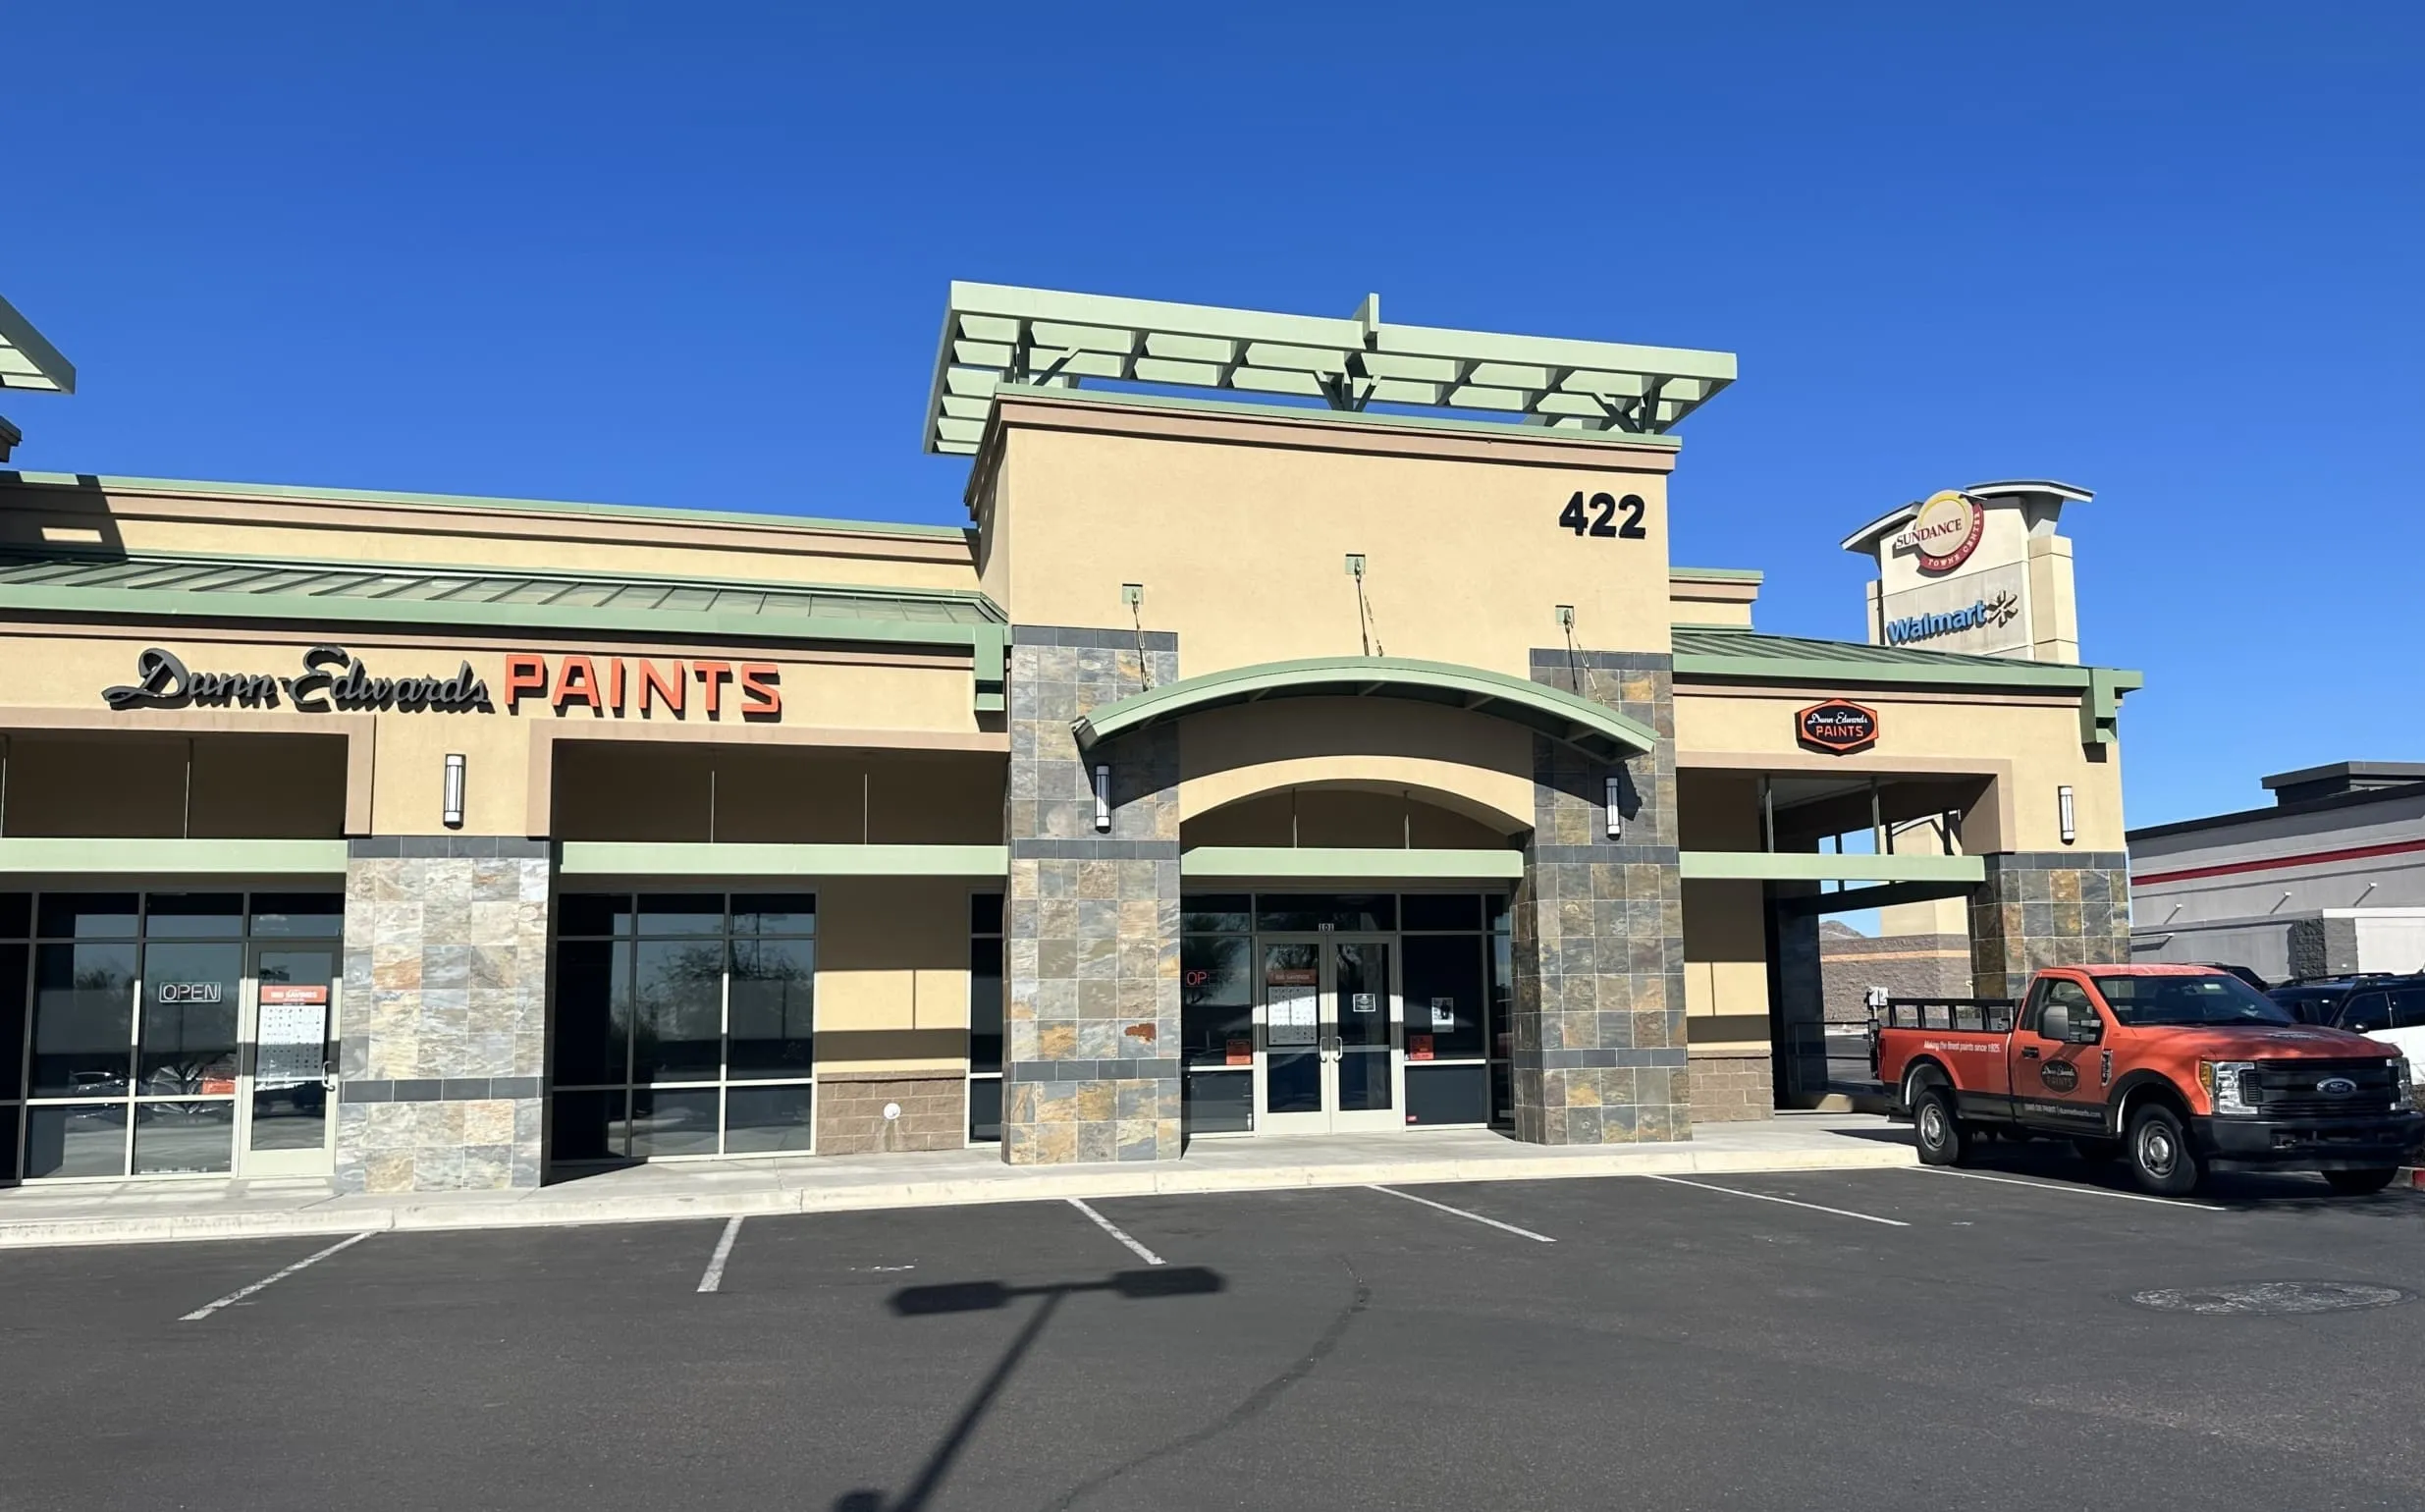 Dunn-Edwards Paint Store in Buckeye AZ 85326